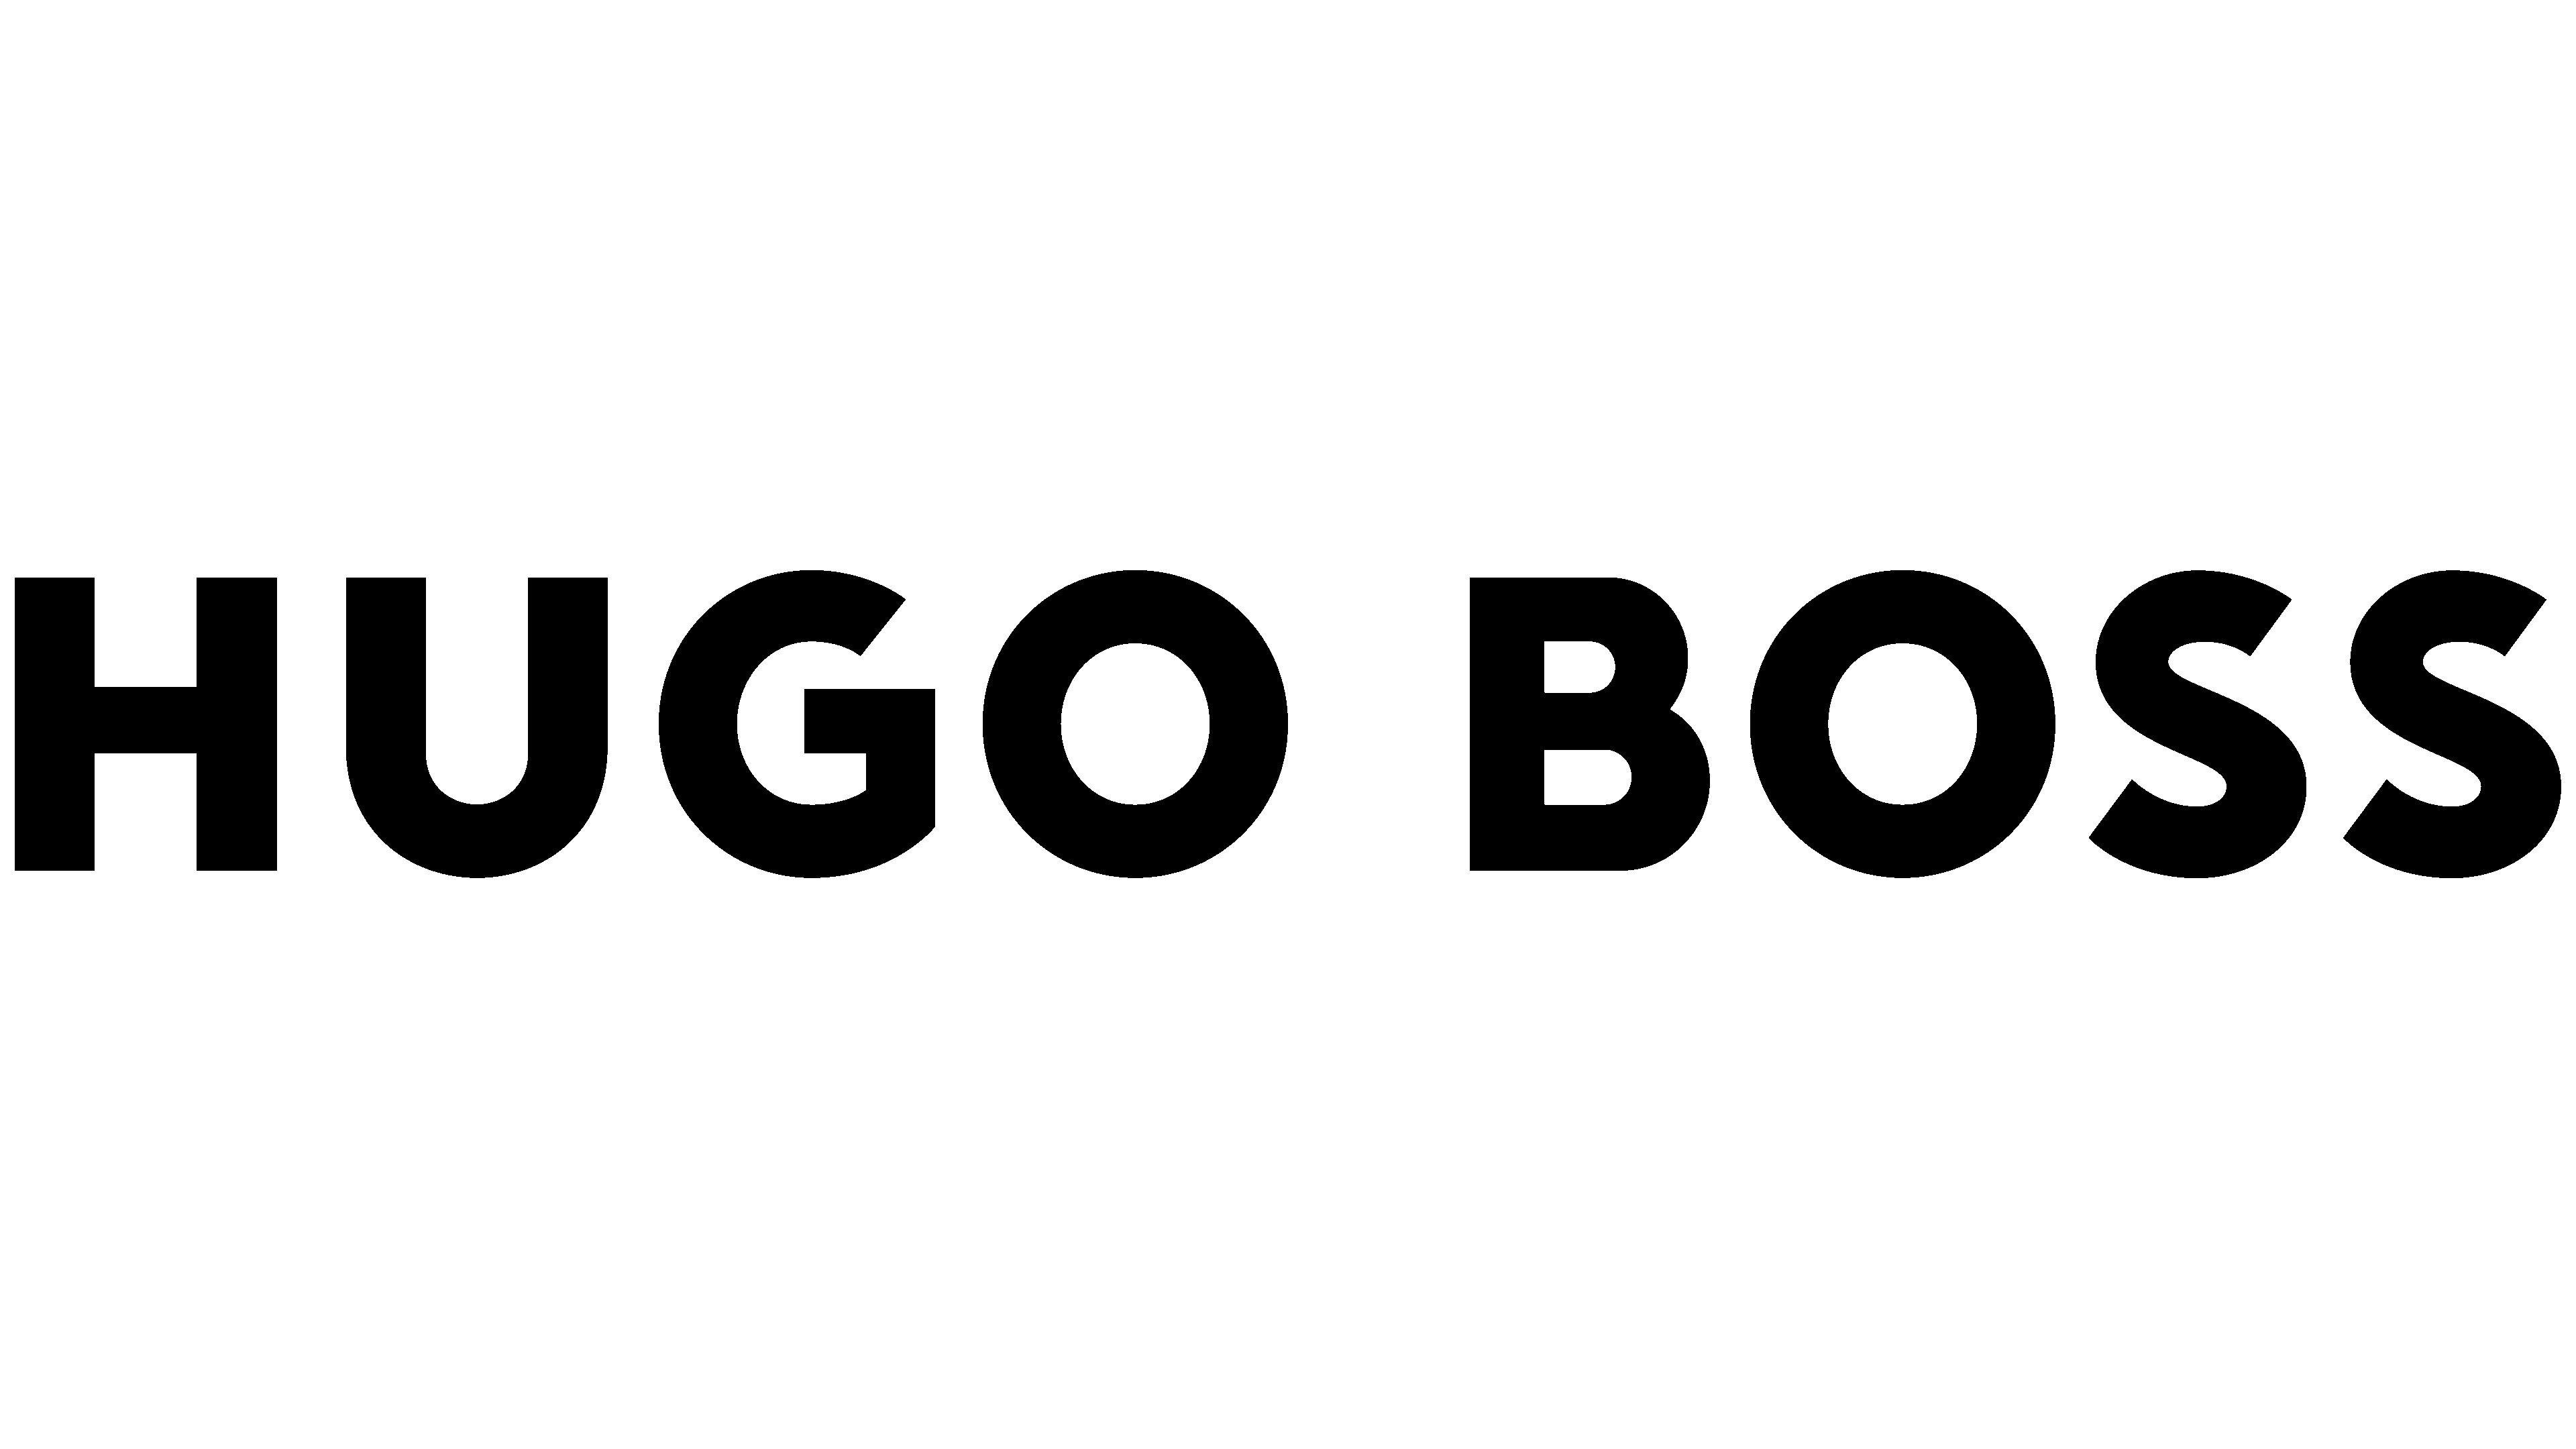 Hugo Boss history, meaning, symbol,